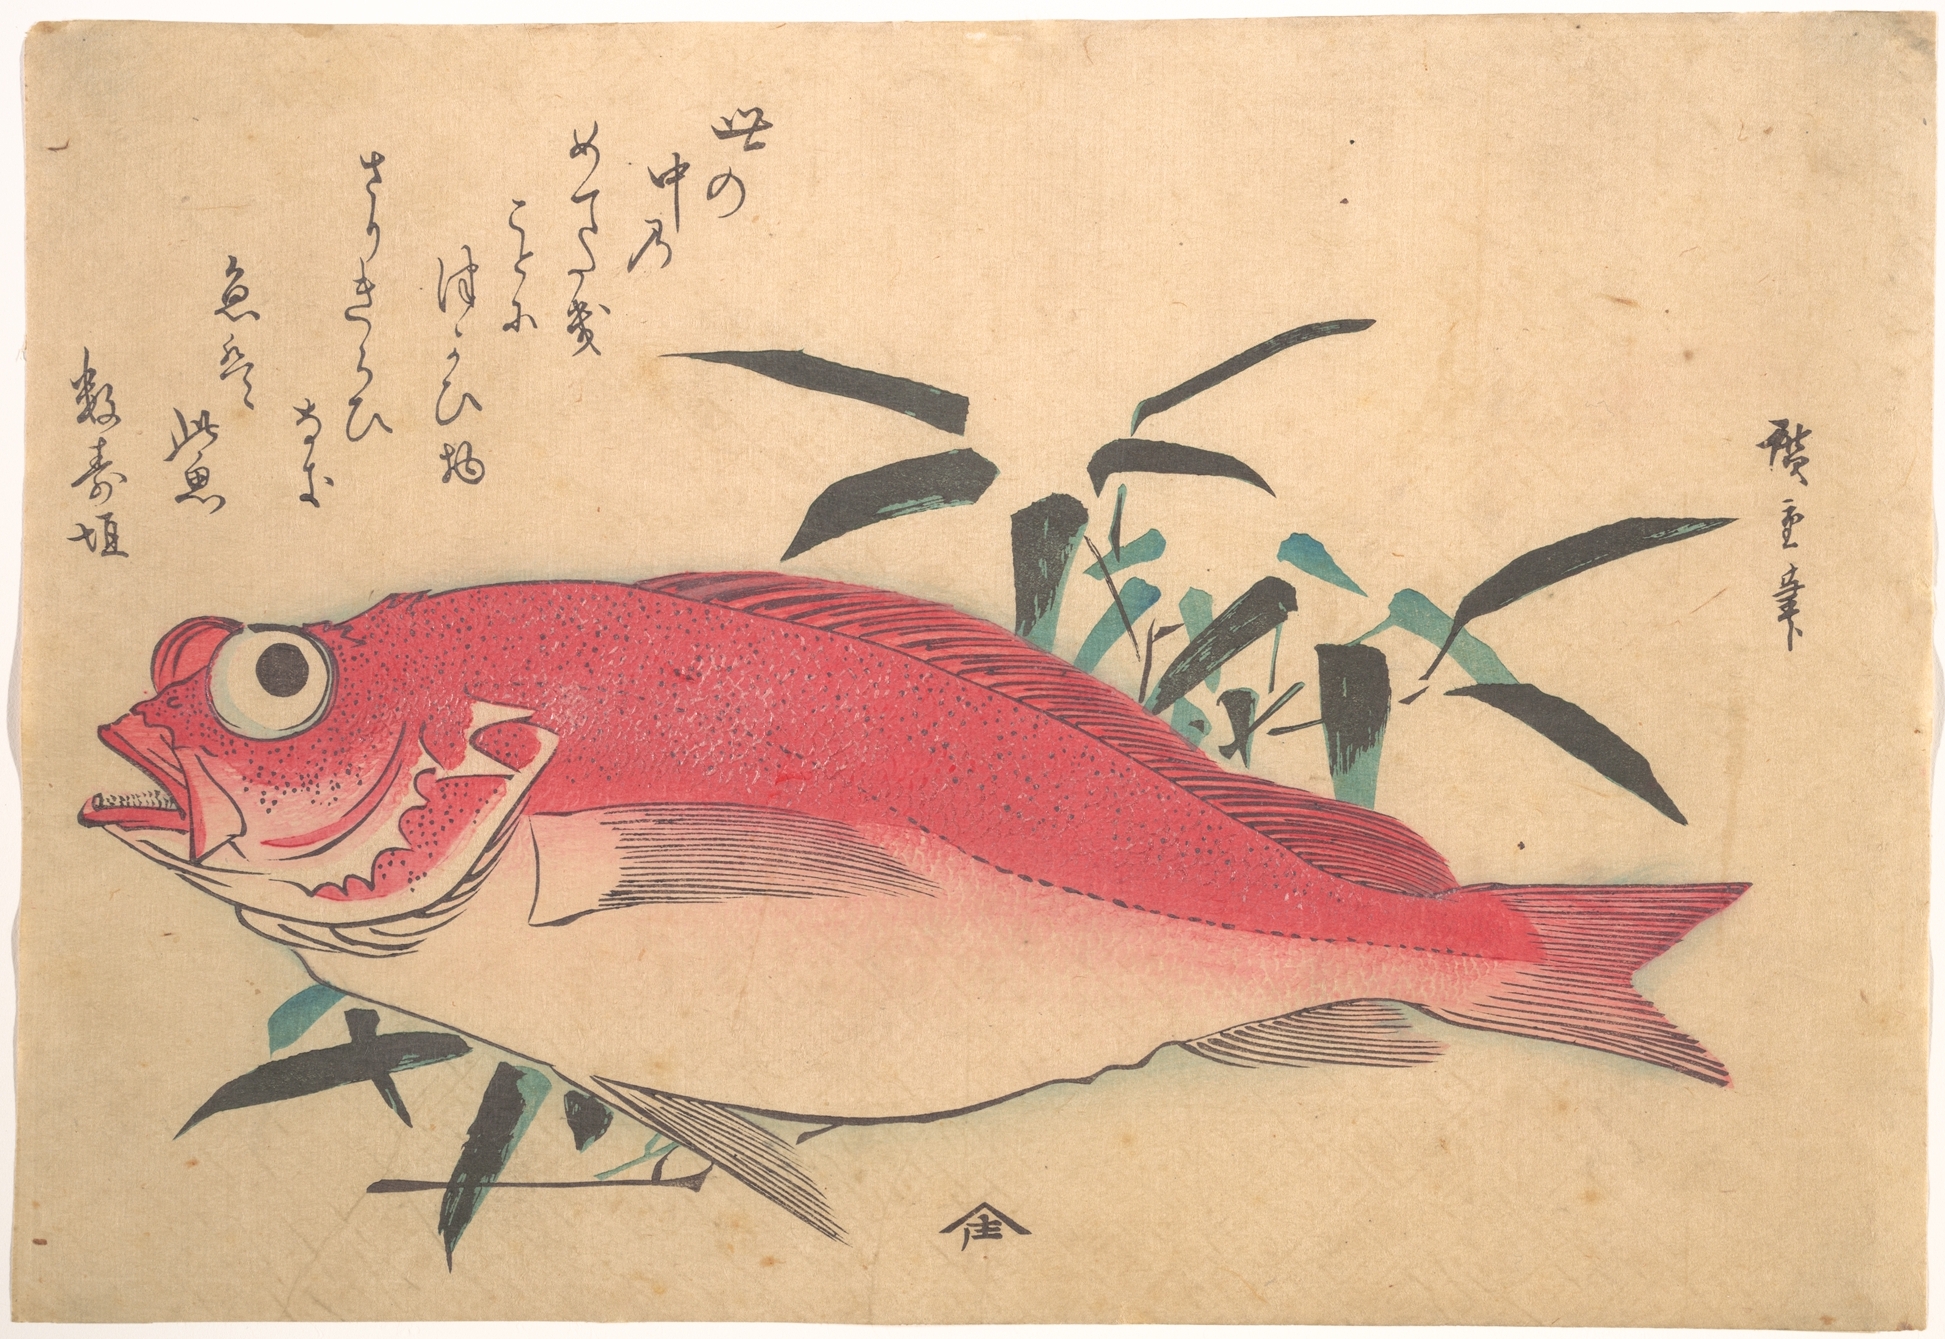 Utagawa Hiroshige | Medetai Fush and Sasaki Bamboo, from the 